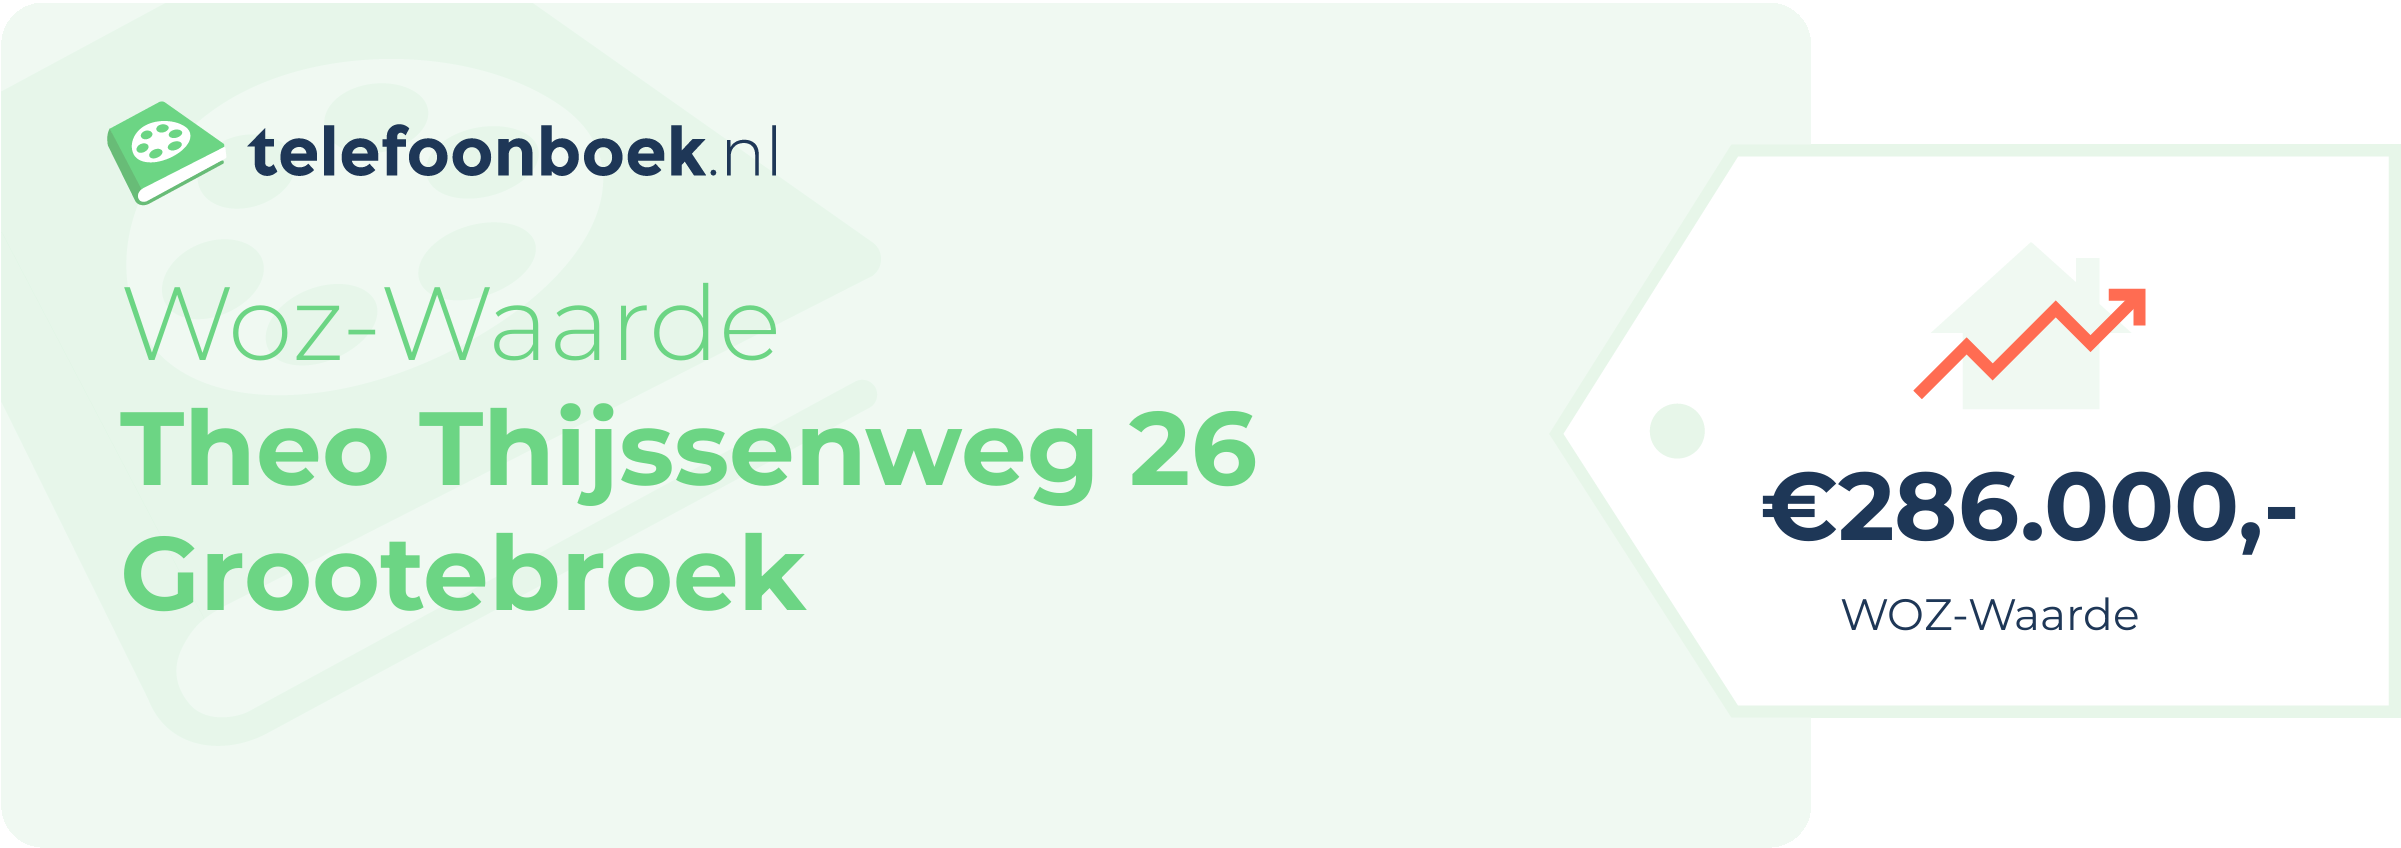 WOZ-waarde Theo Thijssenweg 26 Grootebroek